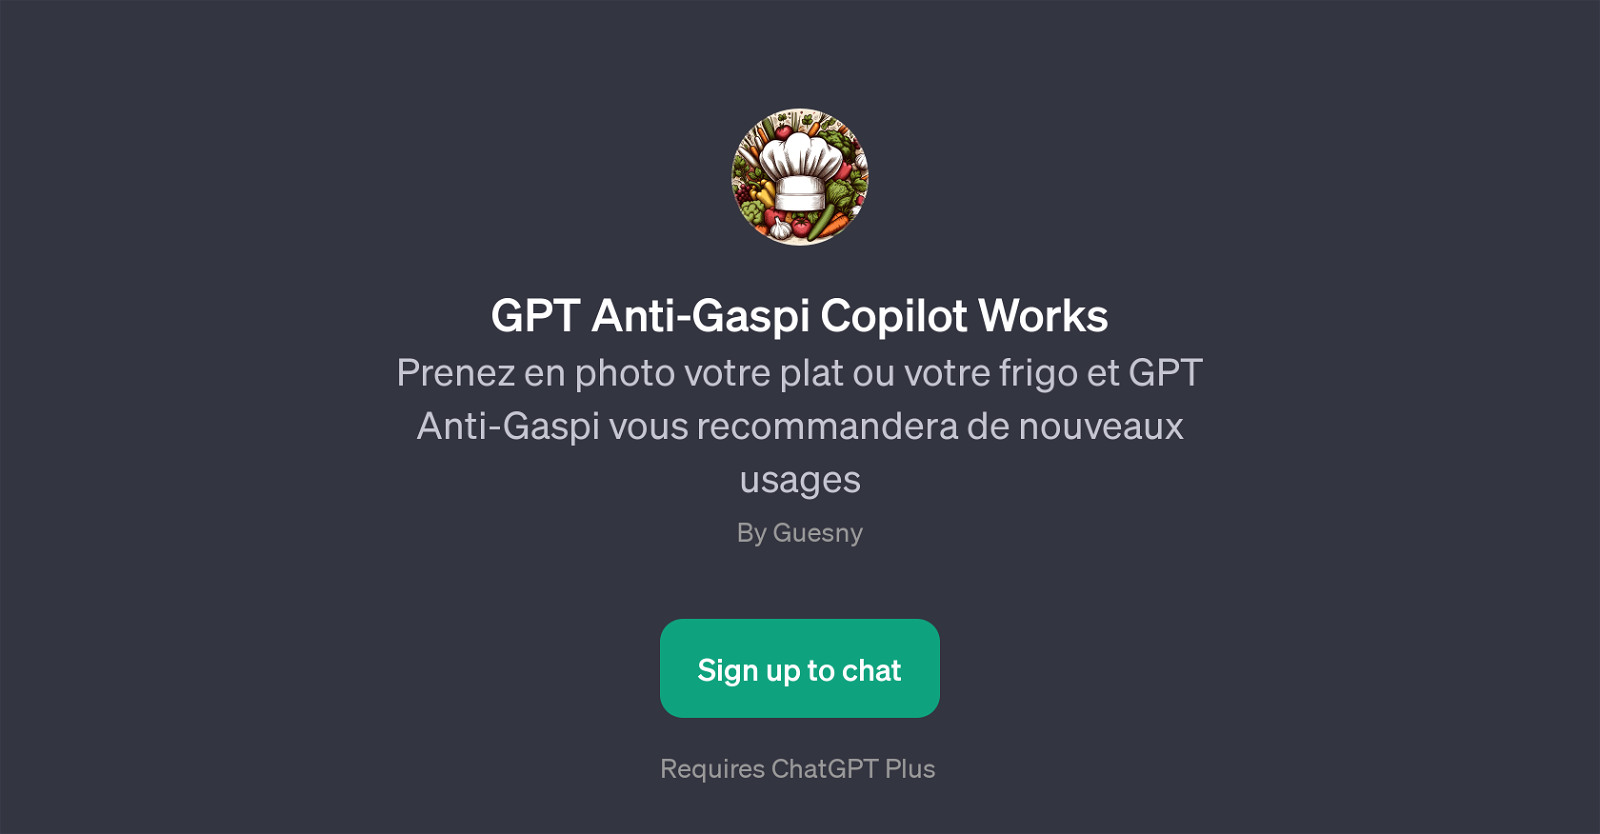 GPT Anti-Gaspi Copilot website